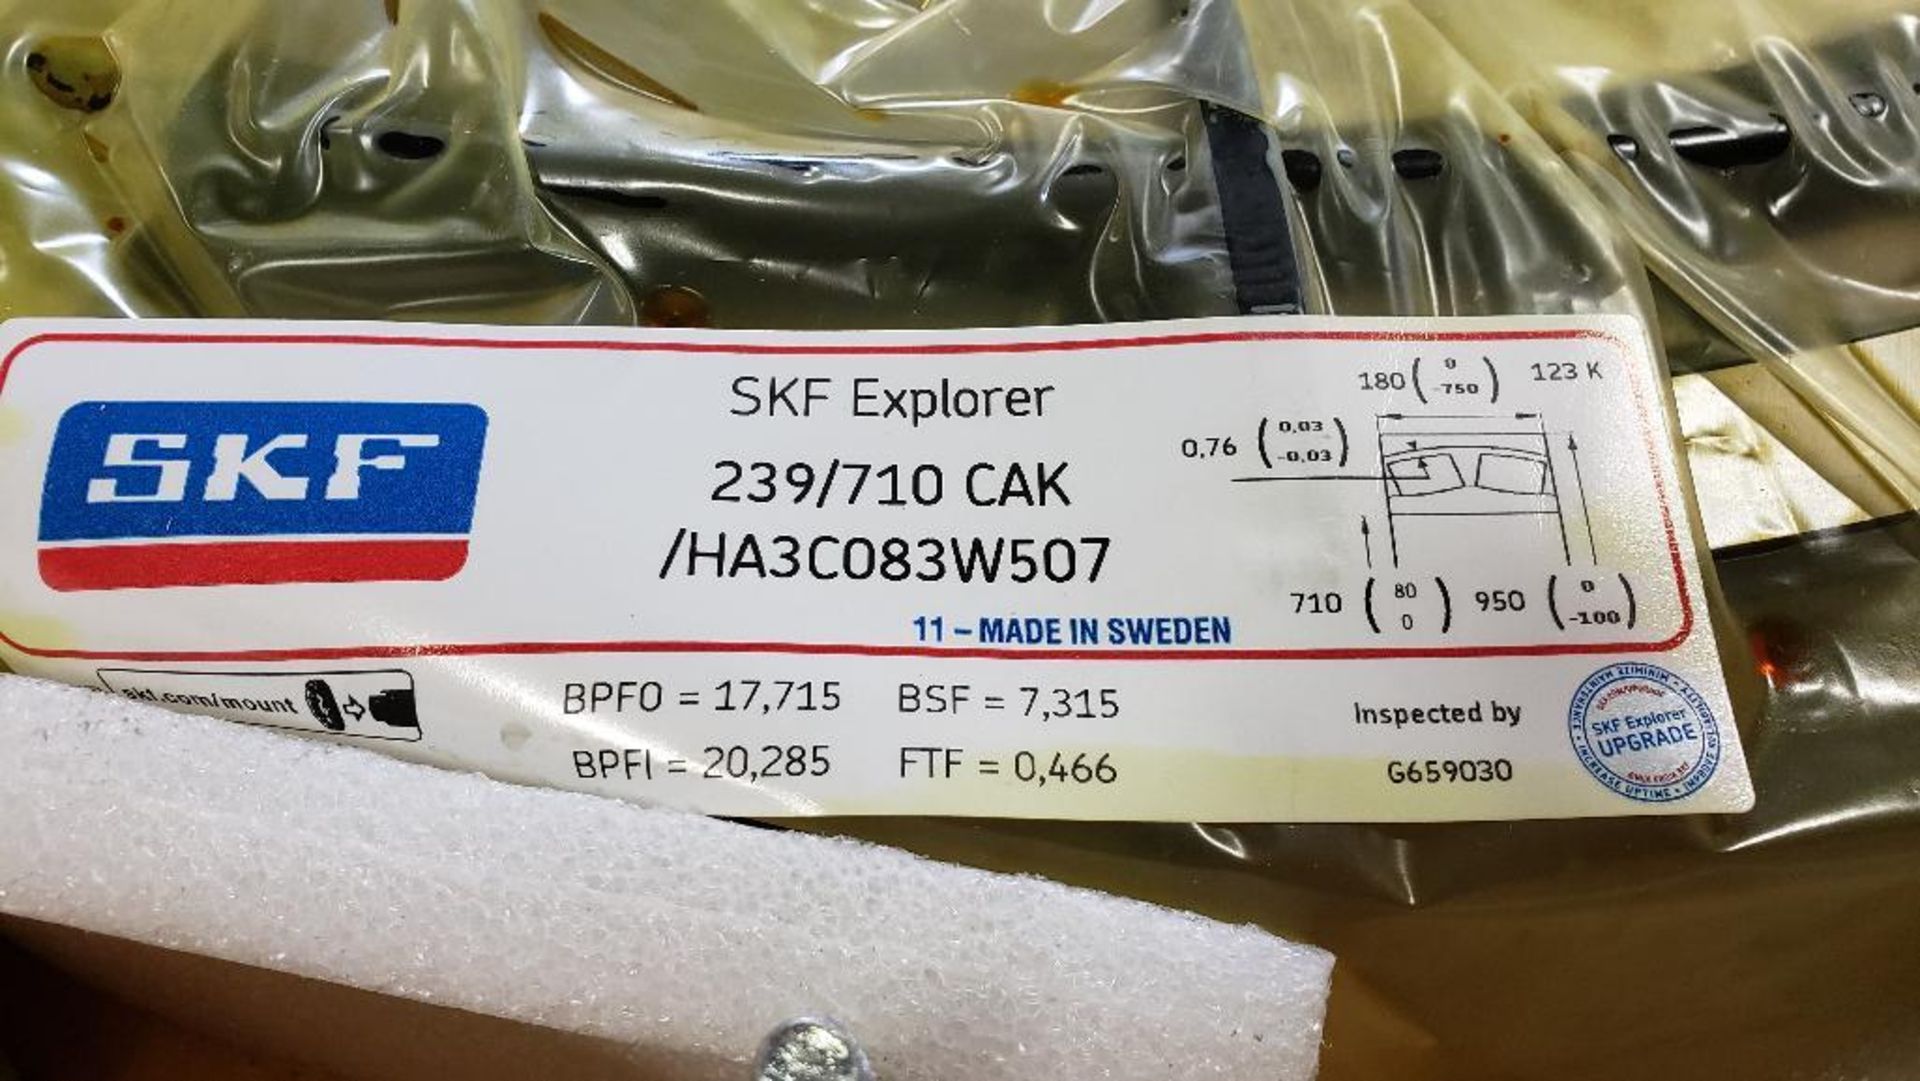 SKF super precion large capacity bearing. Part number 239/710 CAK/HA3C083W507. New in crate. - Image 3 of 4